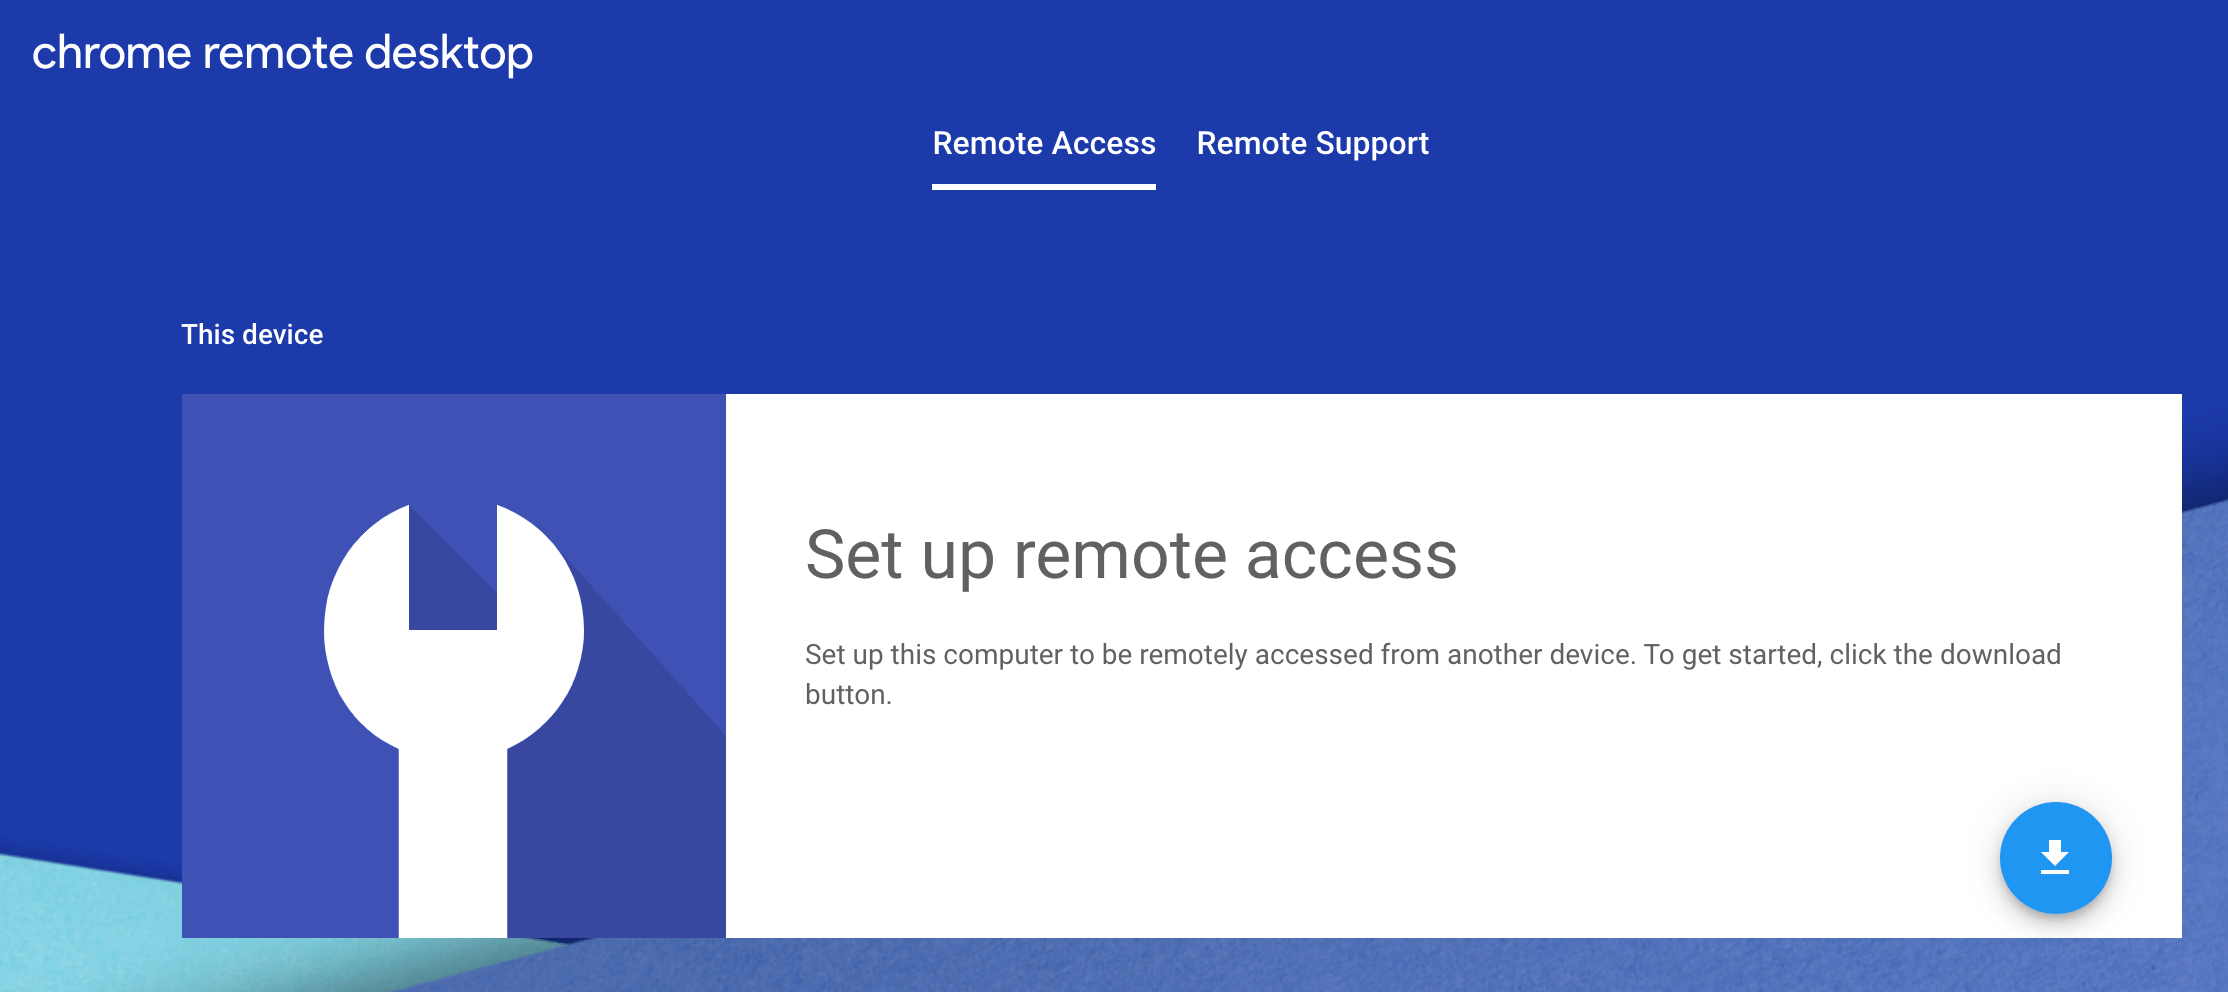 Chrome Remote Desktop remote access setup screen.